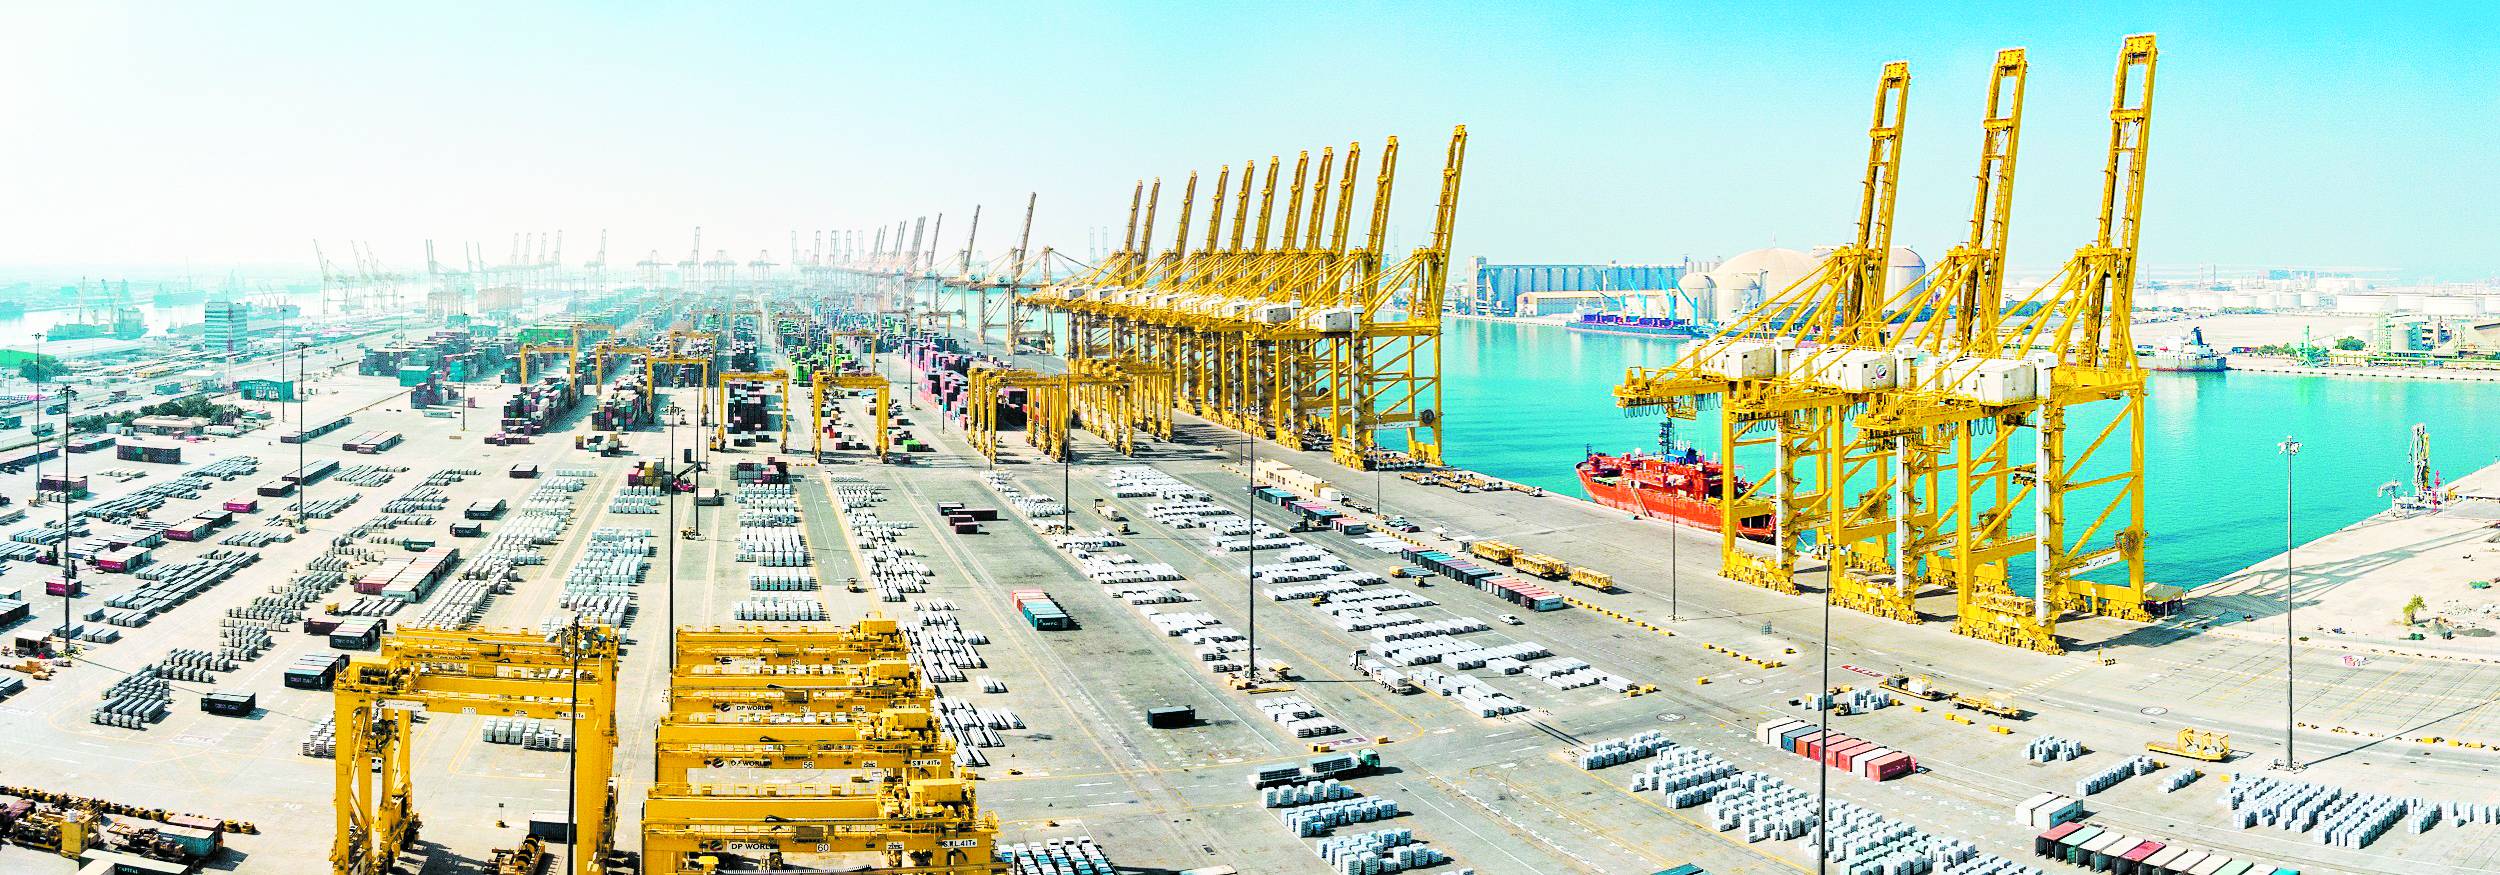 Image:الإمارات الرابعة عالمياً في الفائض التجاري خلال 2022